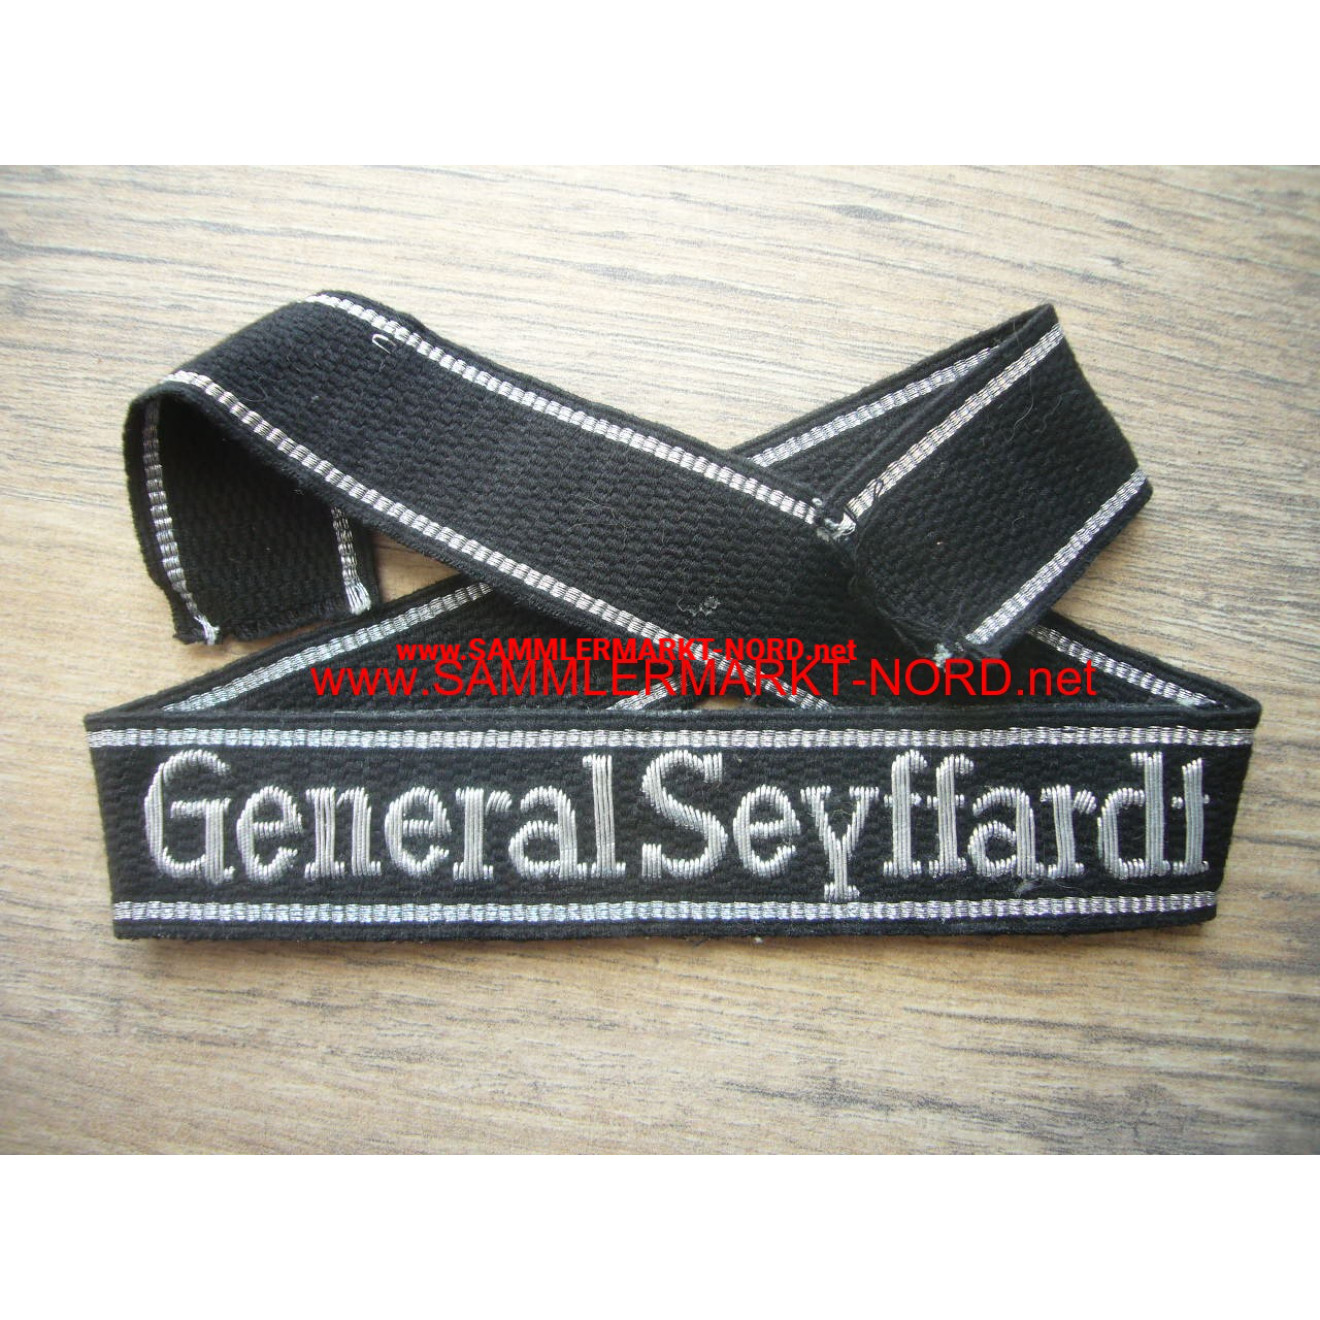 SS - Ärmelband "General Seyffardt"